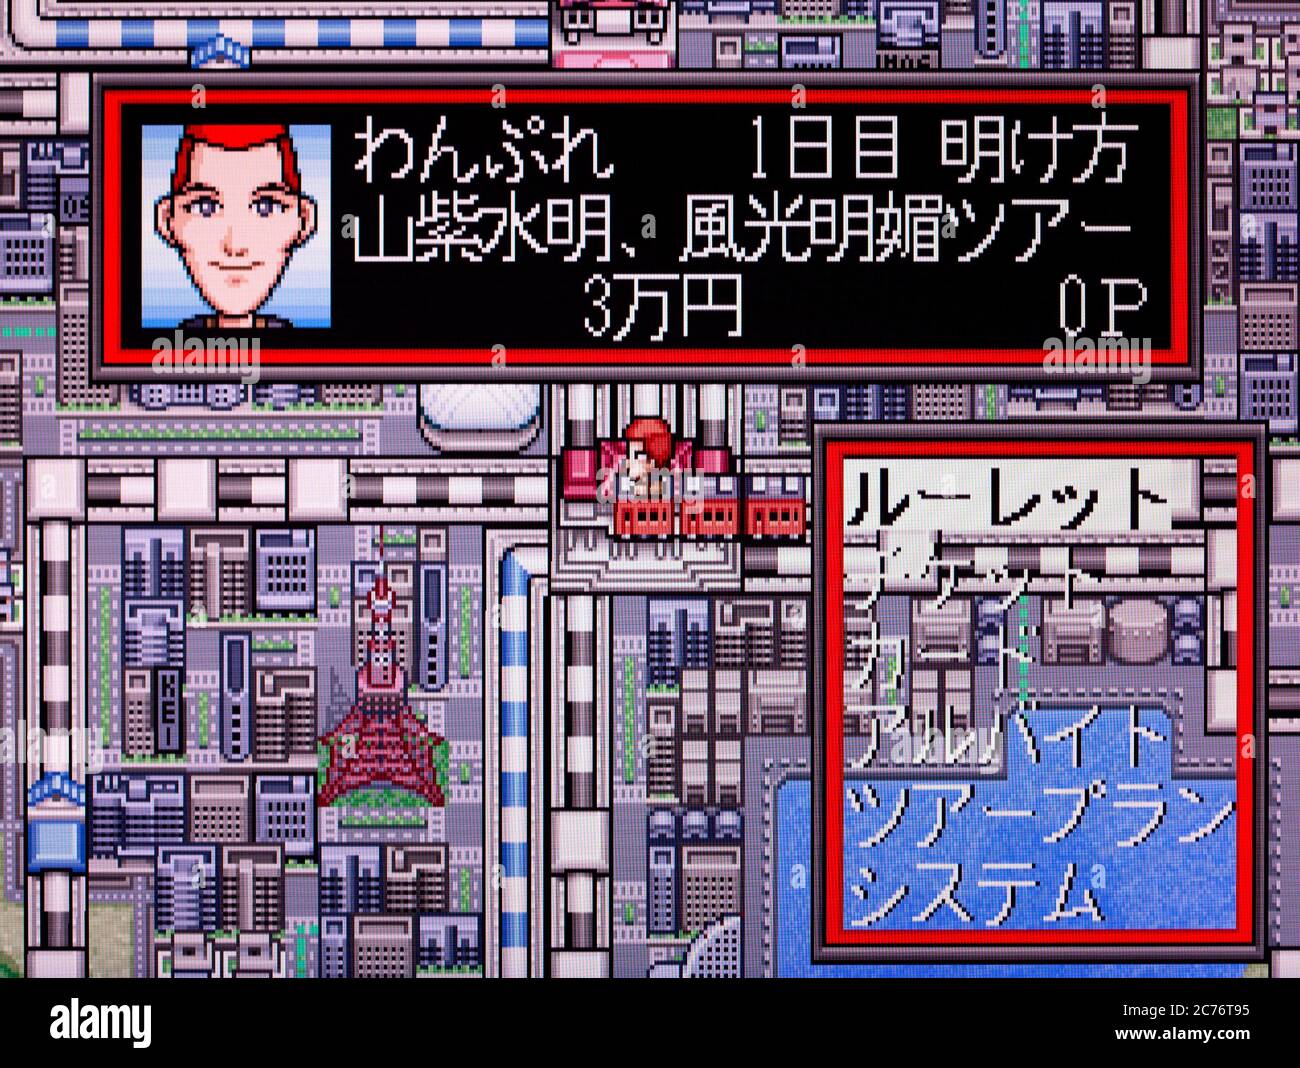 DX Nihon Tokkyuu Ryokou Game - Let's Travel in Japan - Sega Saturn Videogame - Editorial use only Stock Photo